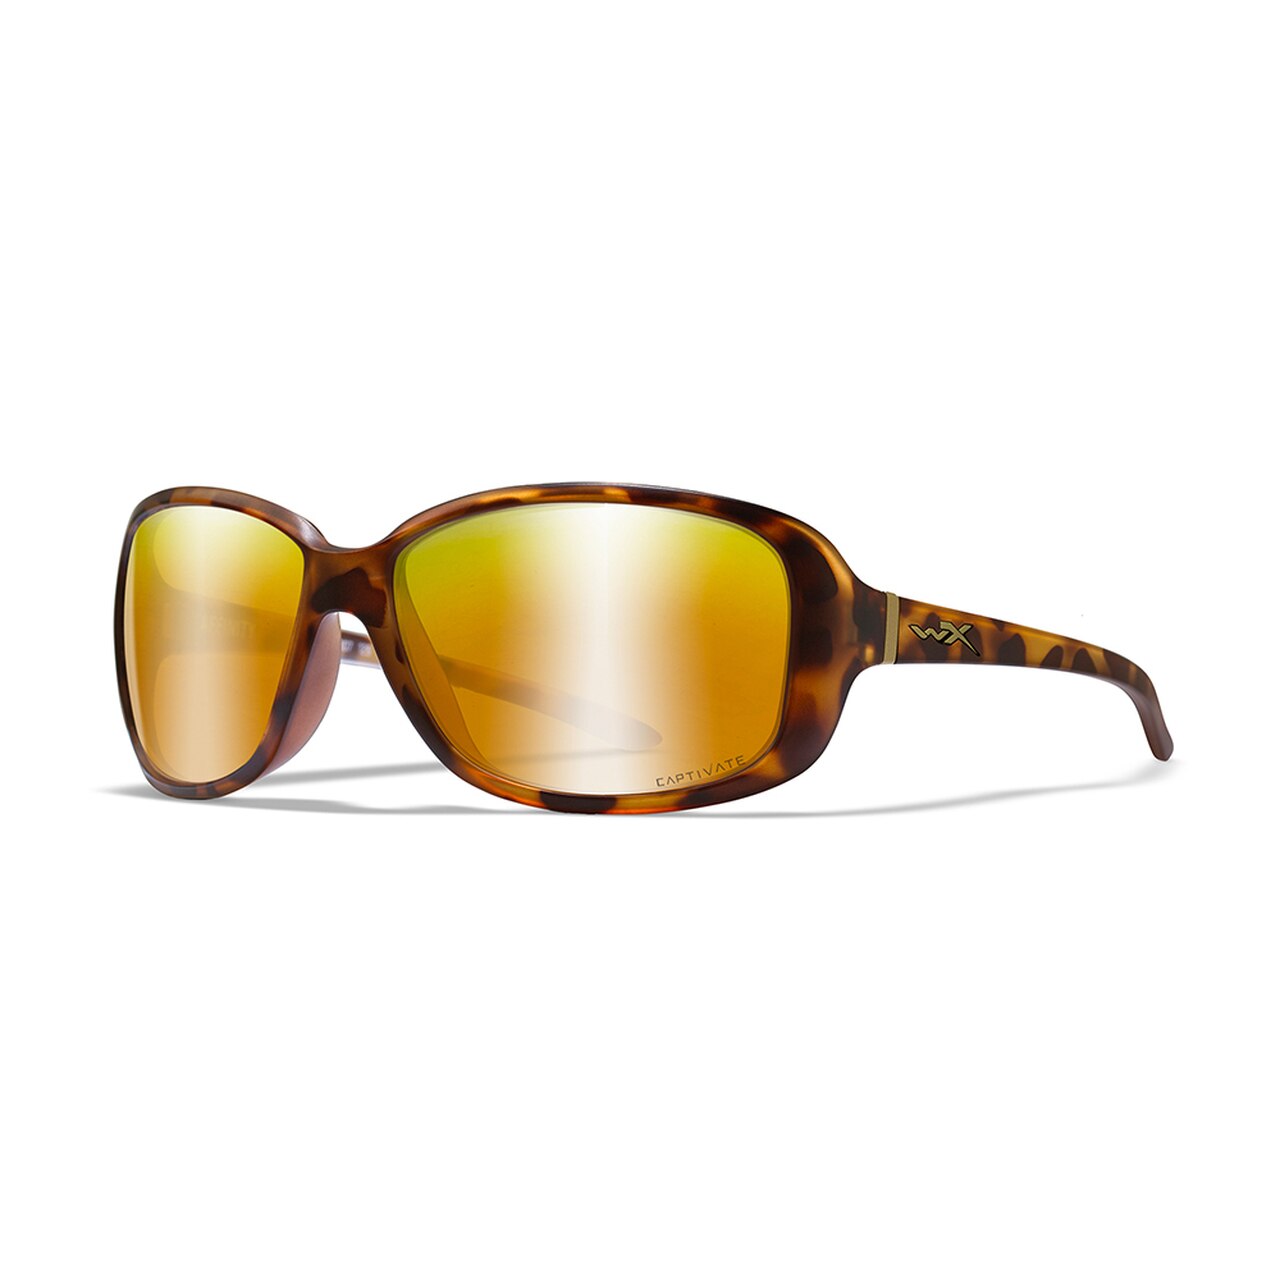 Wiley X Affinity Sunglasses Polarised Bronze Lens Matte Demi Frame Tactical Distributors Ltd New Zealand